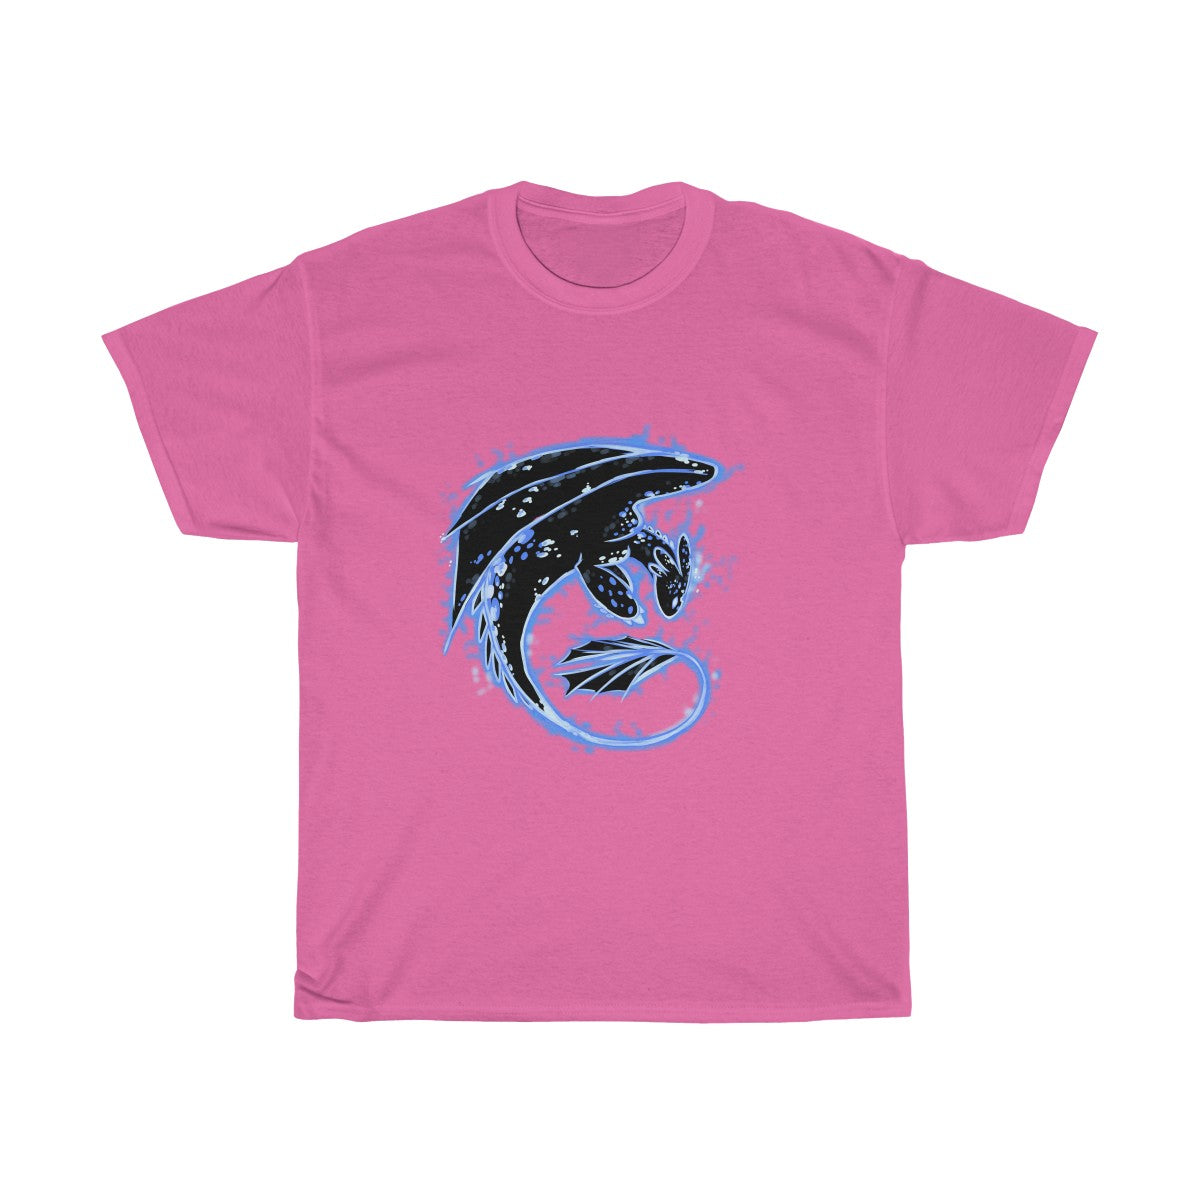 Blue Dragon - T-Shirt T-Shirt Dire Creatures Pink S 